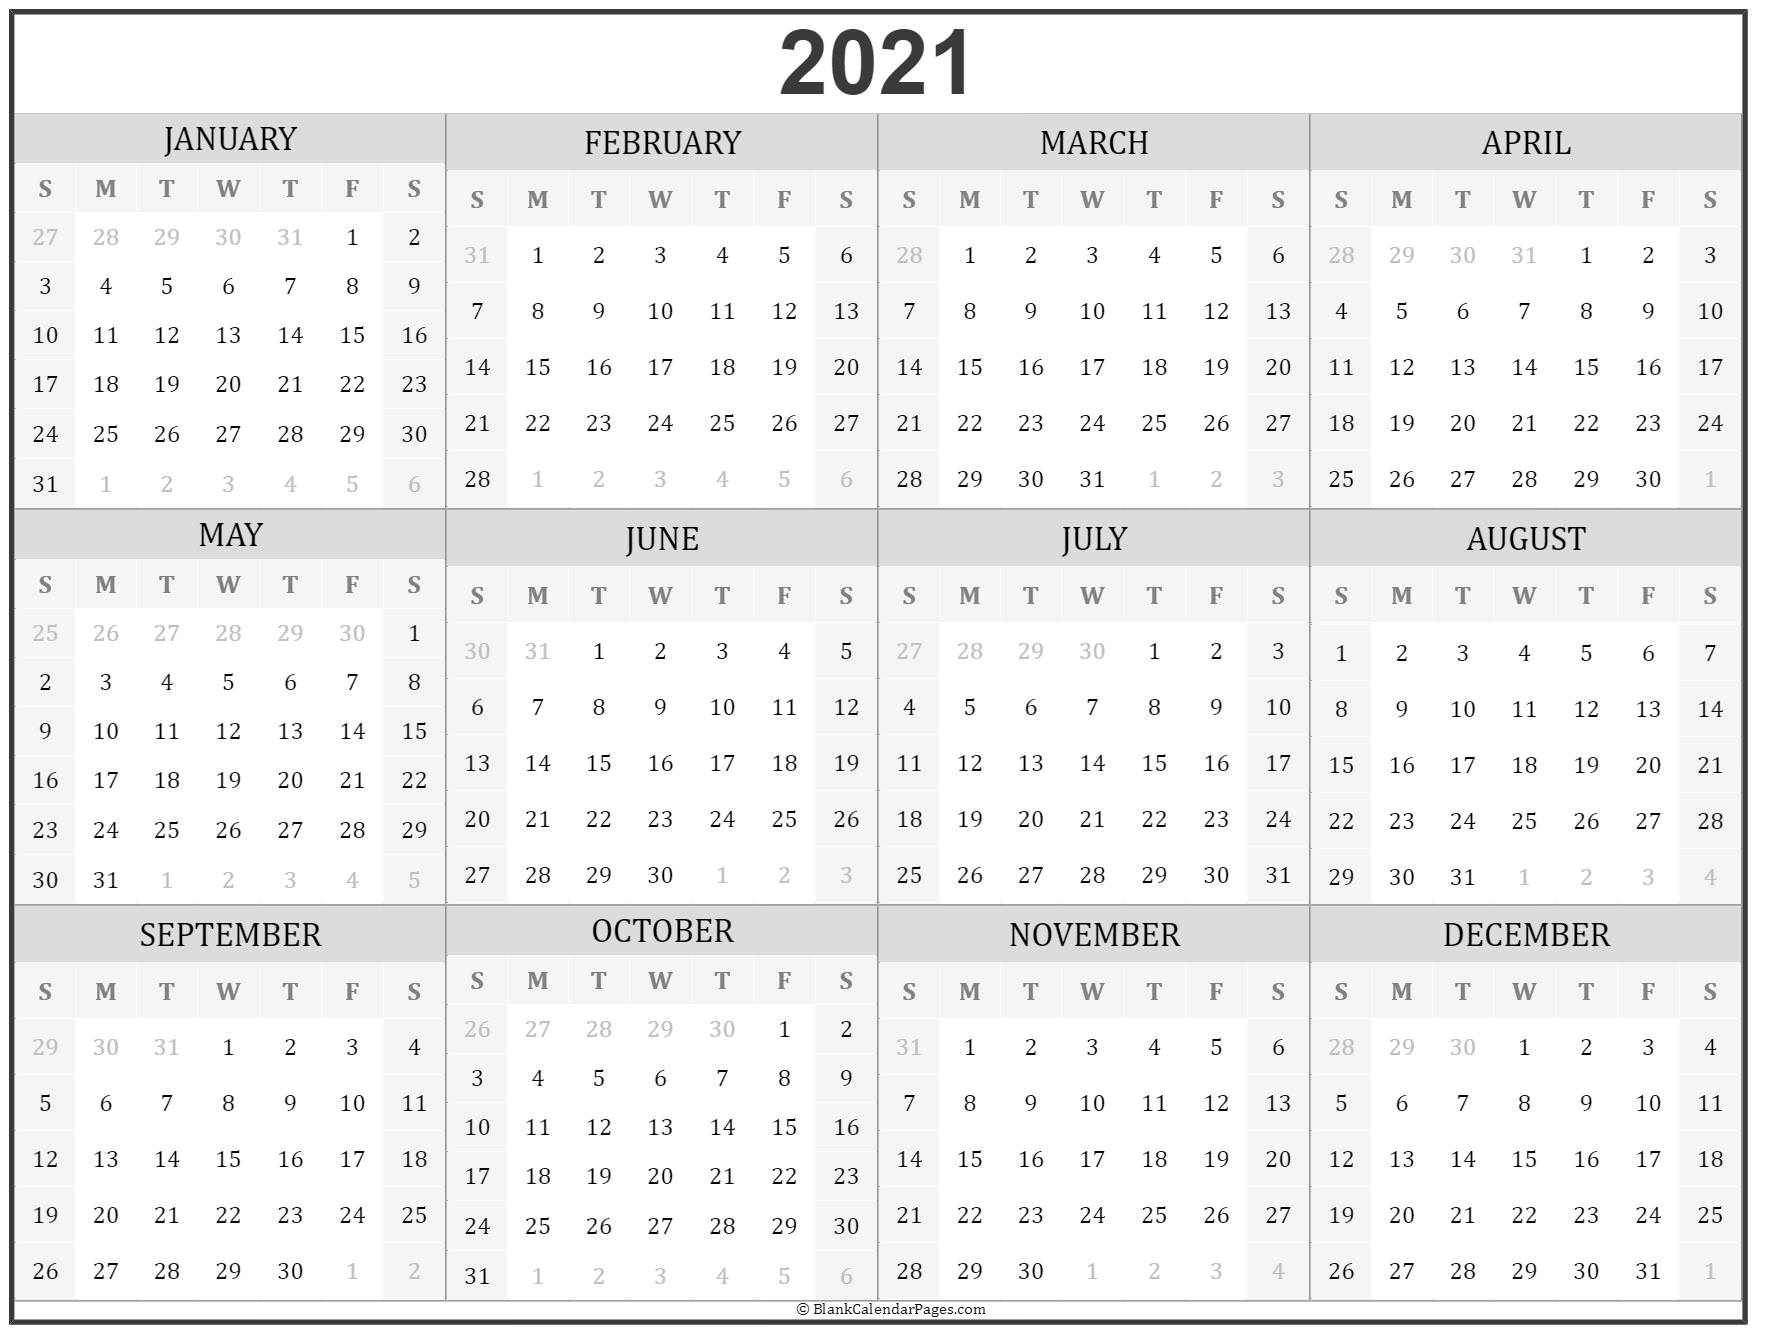 a calendar of 2021 dates